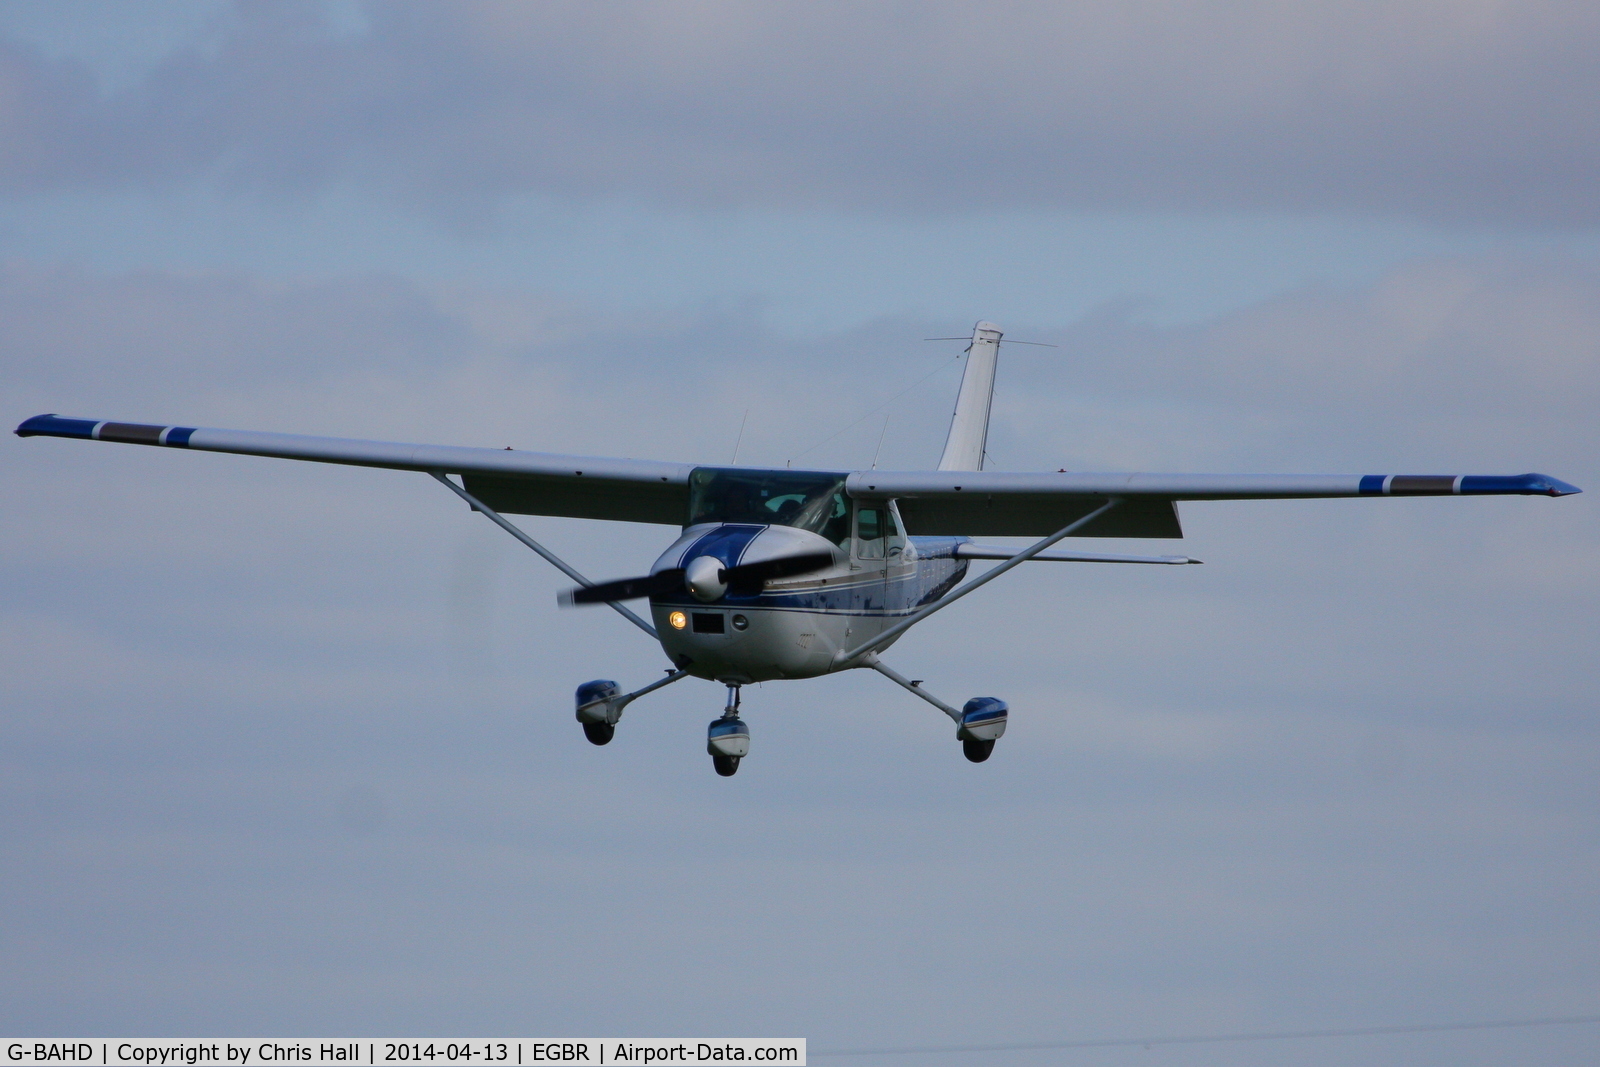 G-BAHD, 1972 Cessna 182P Skylane Skylane C/N 18261501, at Breighton's 'Early Bird' Fly-in 13/04/14